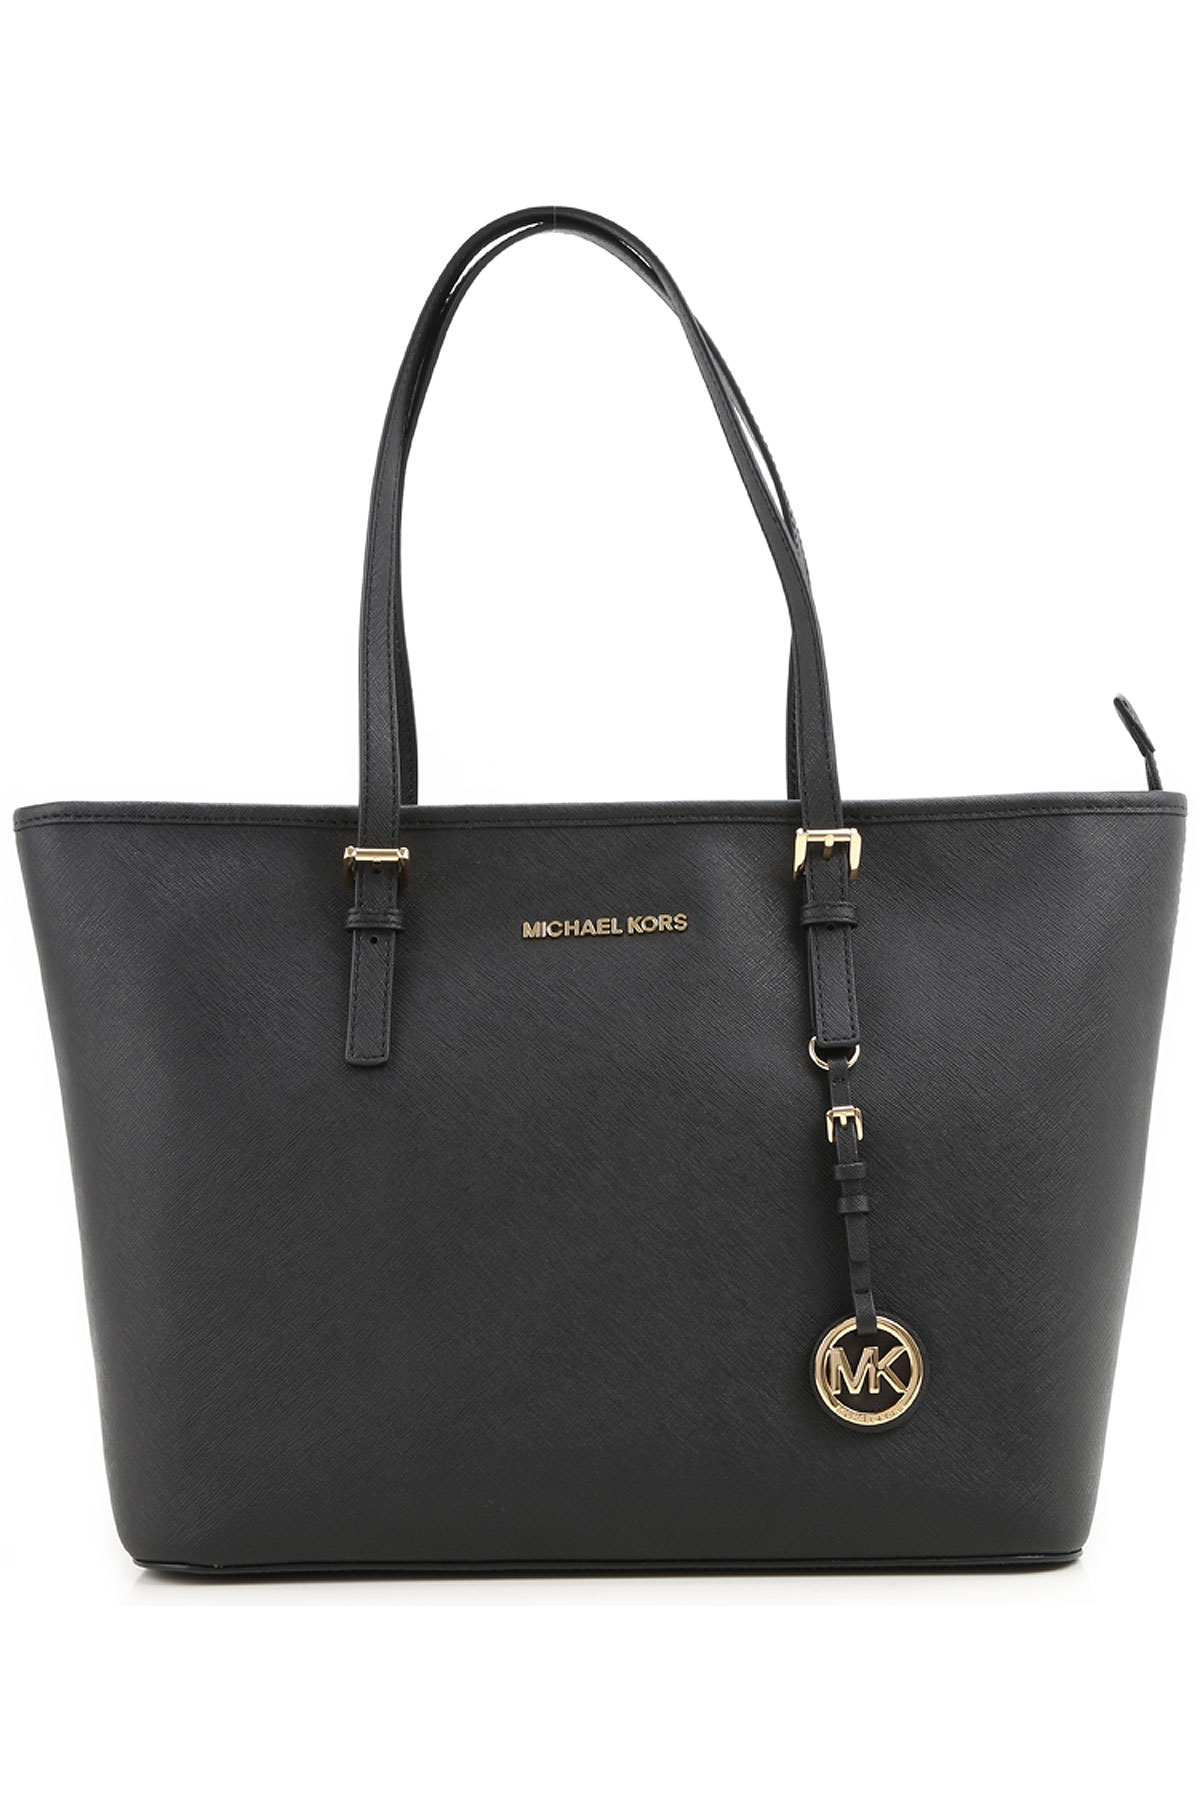 Handbags Michael Kors, Style code: 30s4gtvt2l-001-n500